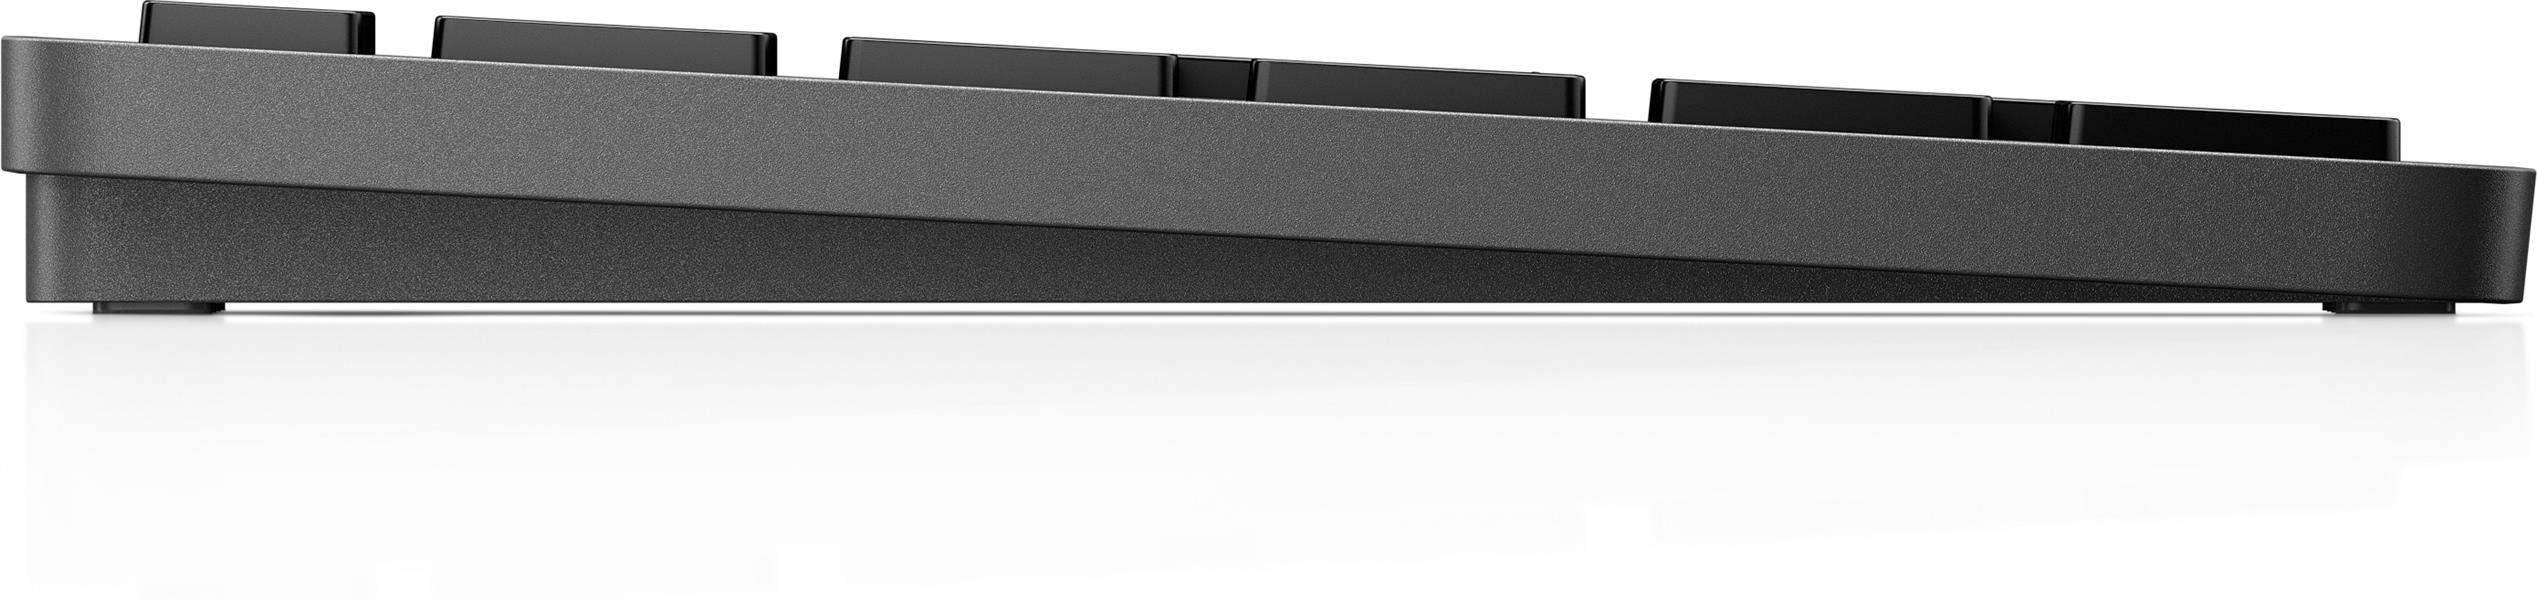 HP 975 dual-mode draadloos toetsenbord + 635 draadloze muis voor meerdere apparaten (1D0K2AA) + Renew Executive 16 inch laptoptas (6B8Y2AA)